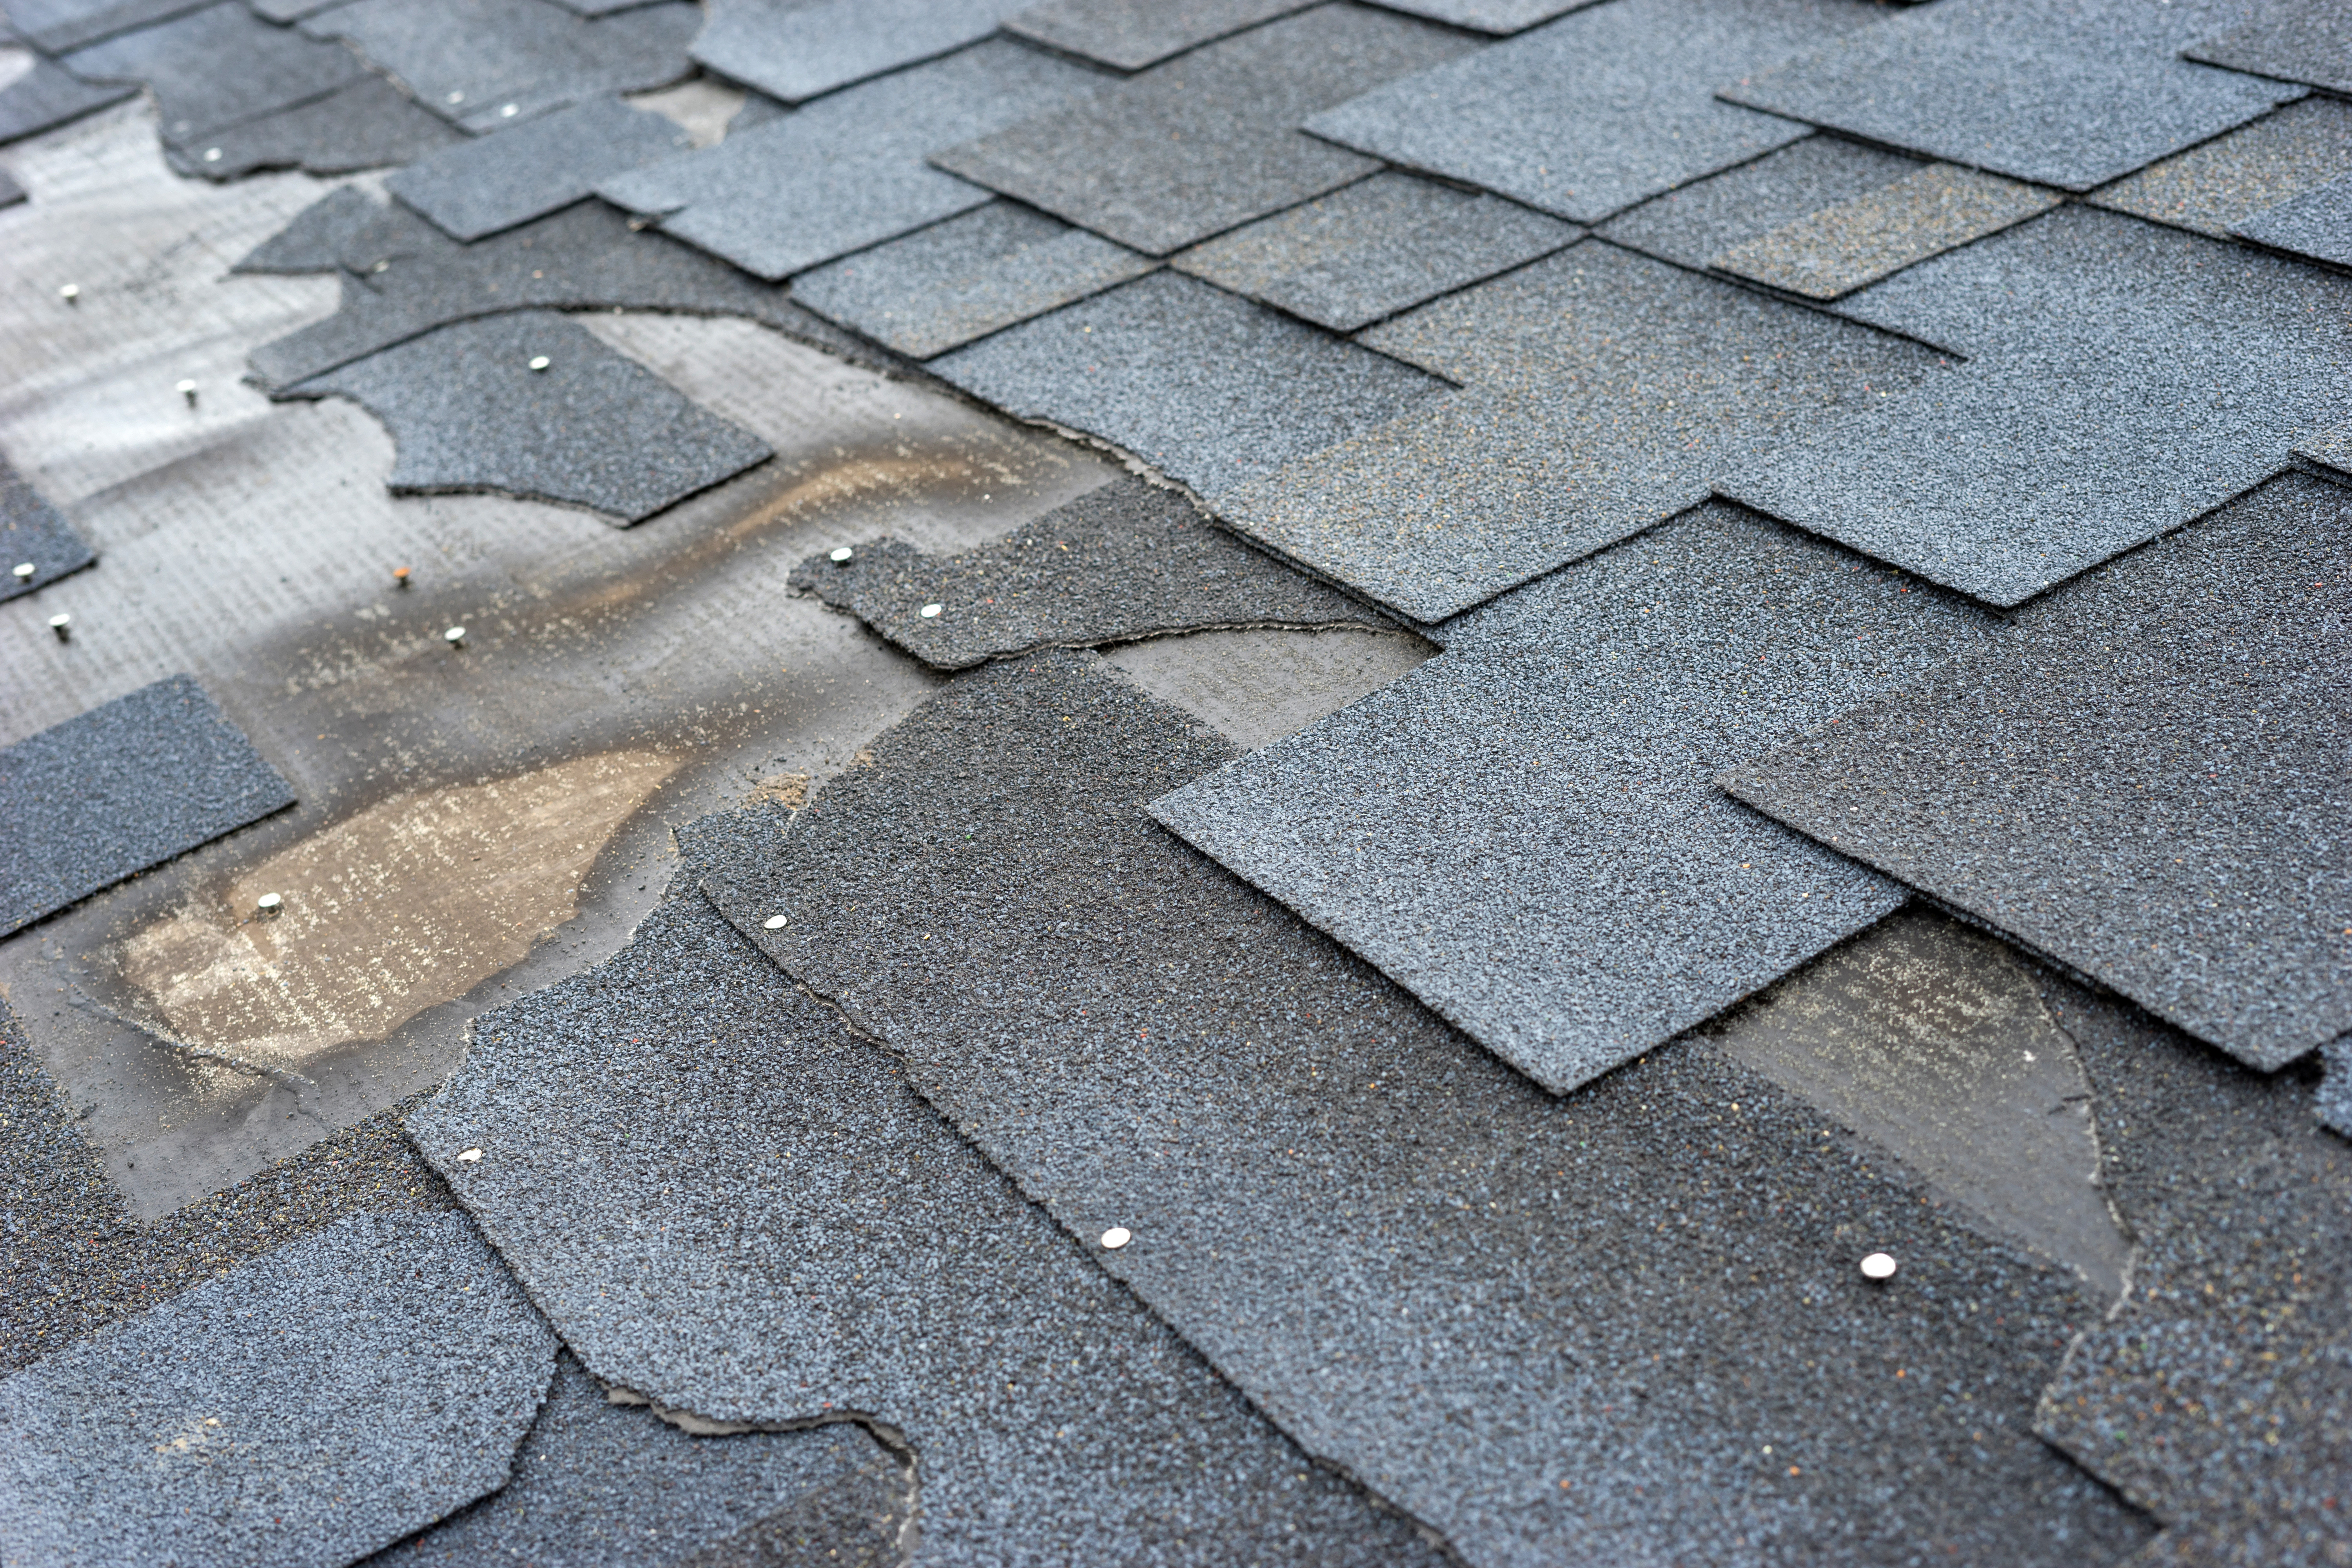 Asphalt shingles roof damage that needs repair.